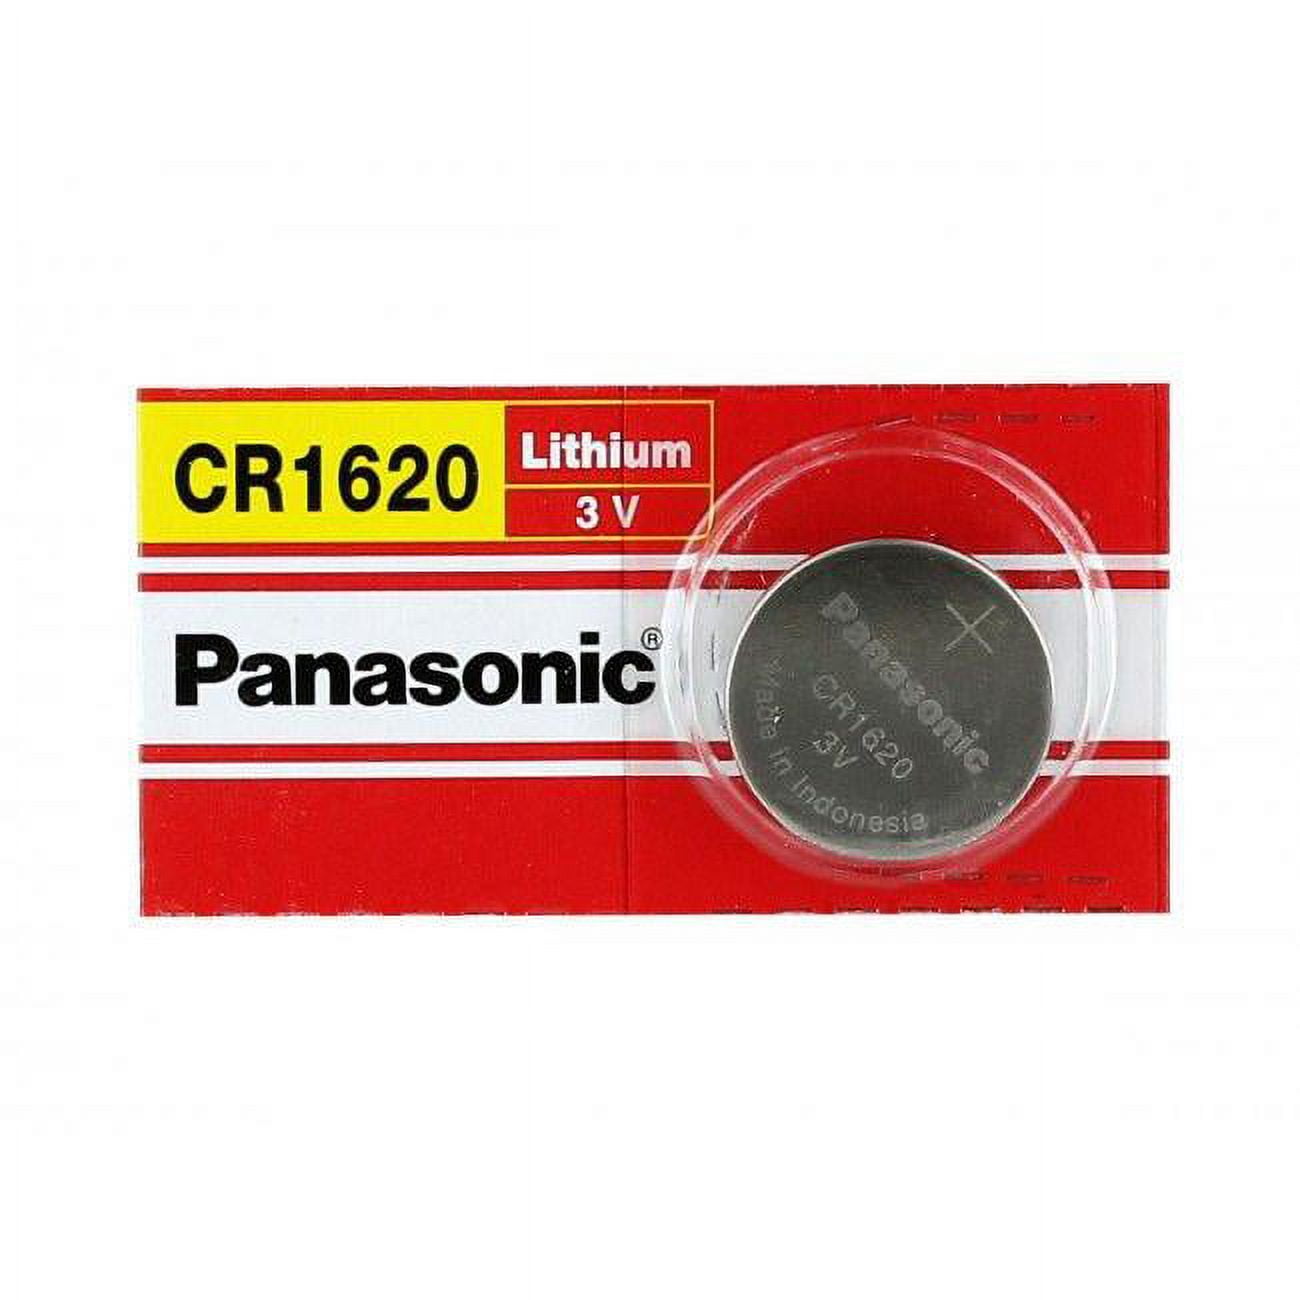 Panasonic PANASONIC-CR1620 75mAh 3V Lithium Primary Coin Cell Battery